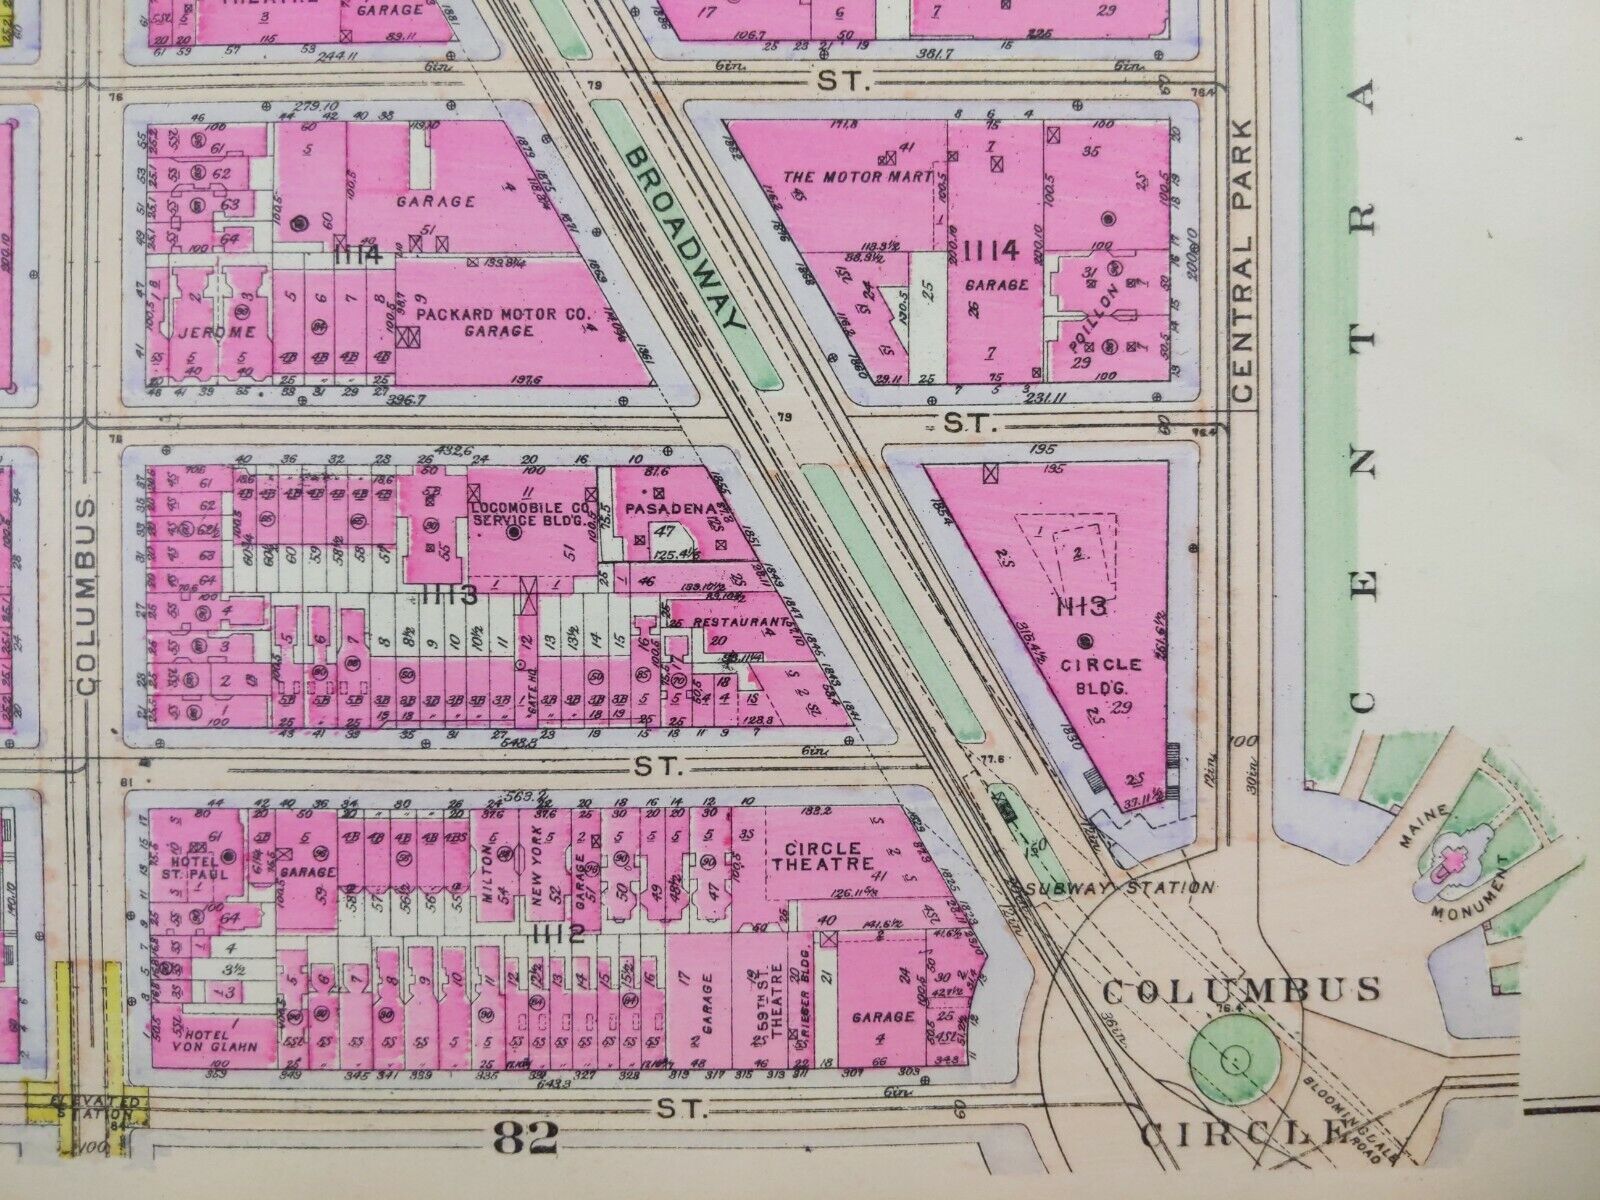 1916 COLUMBUS CIRCLE EMPIRE HOTEL LINCOLN SQ. MANHATTAN NEW YORK CITY Street Map